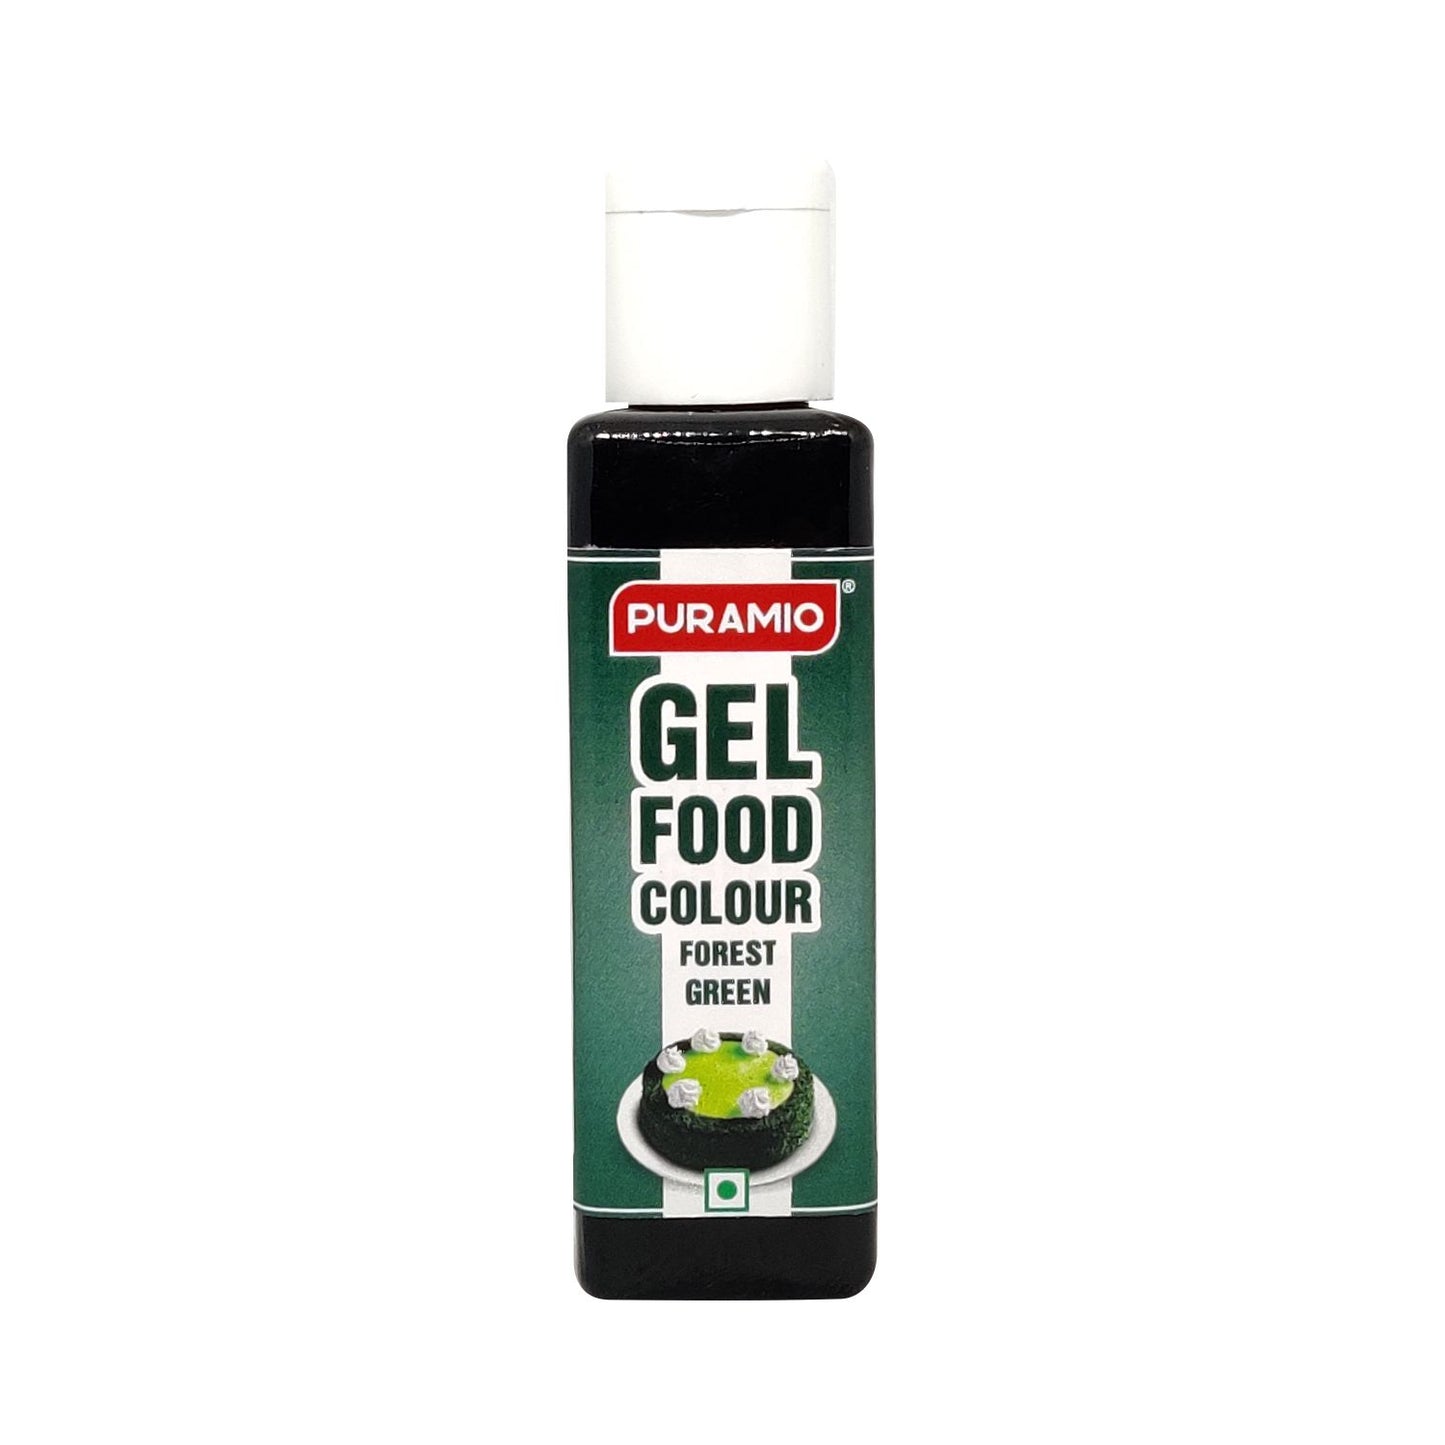 Puramio Gel Food Colour - Forest Green, 30g